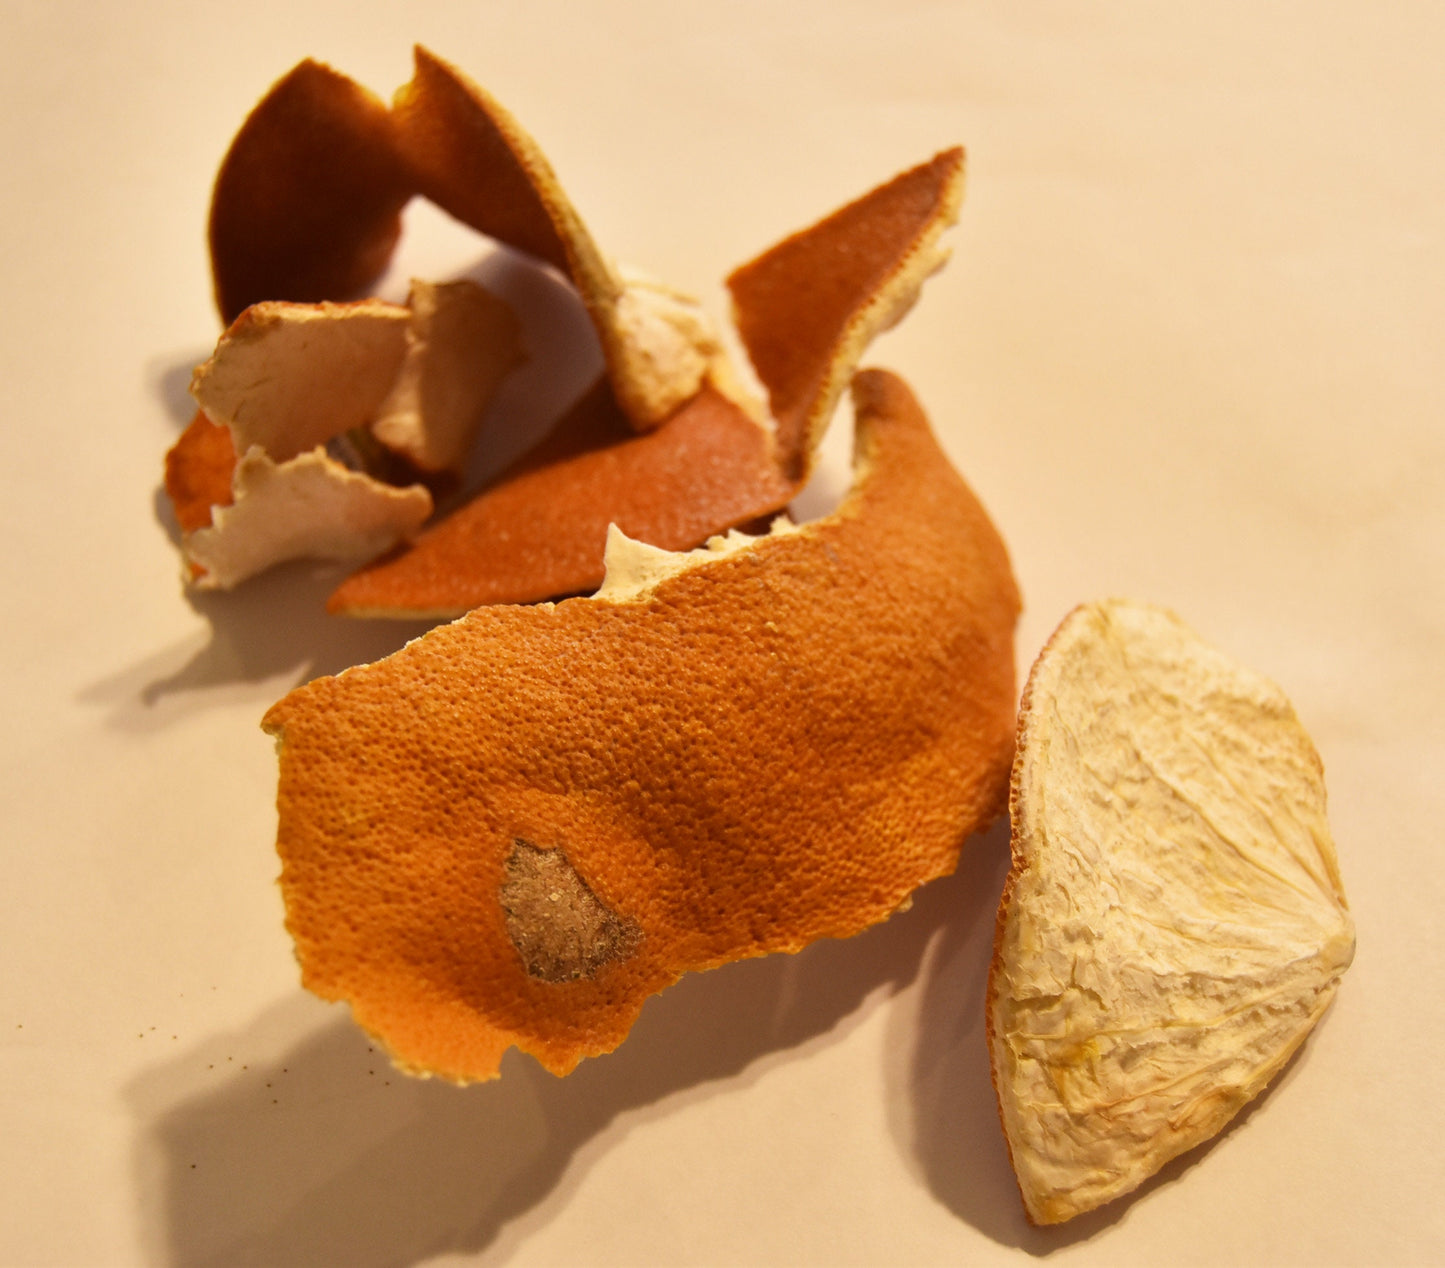 Dried Orange Peel